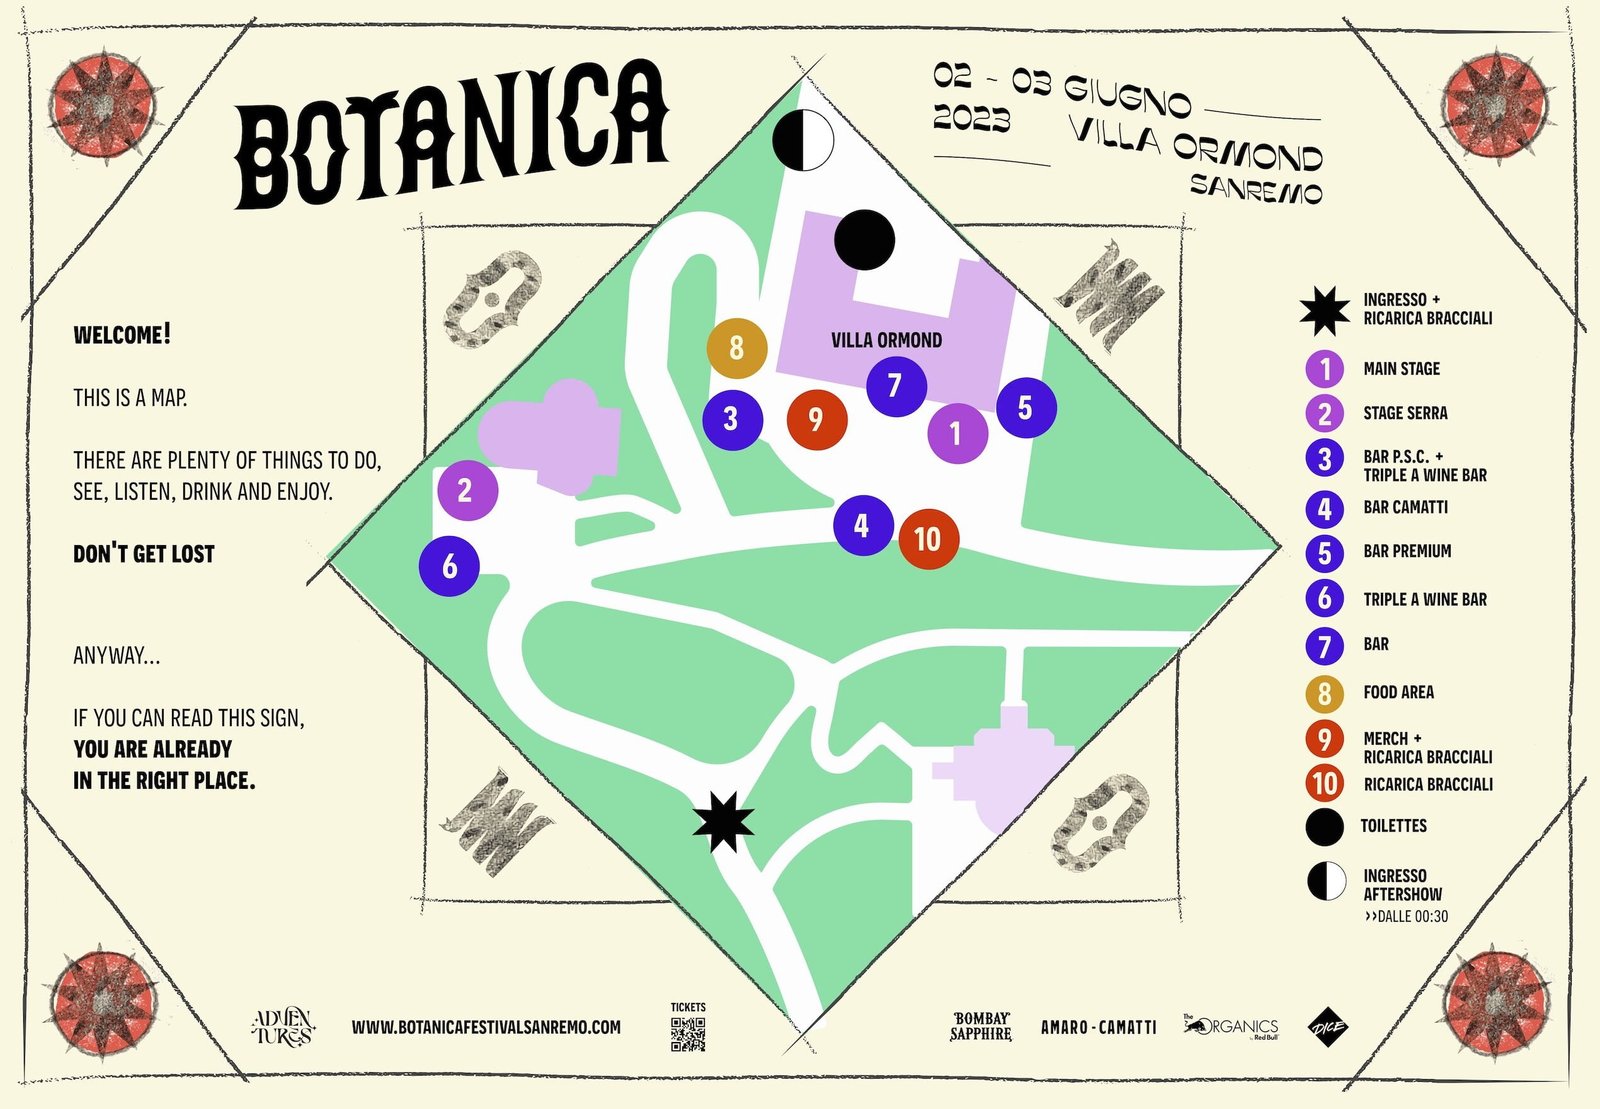 stampa mappa botanica